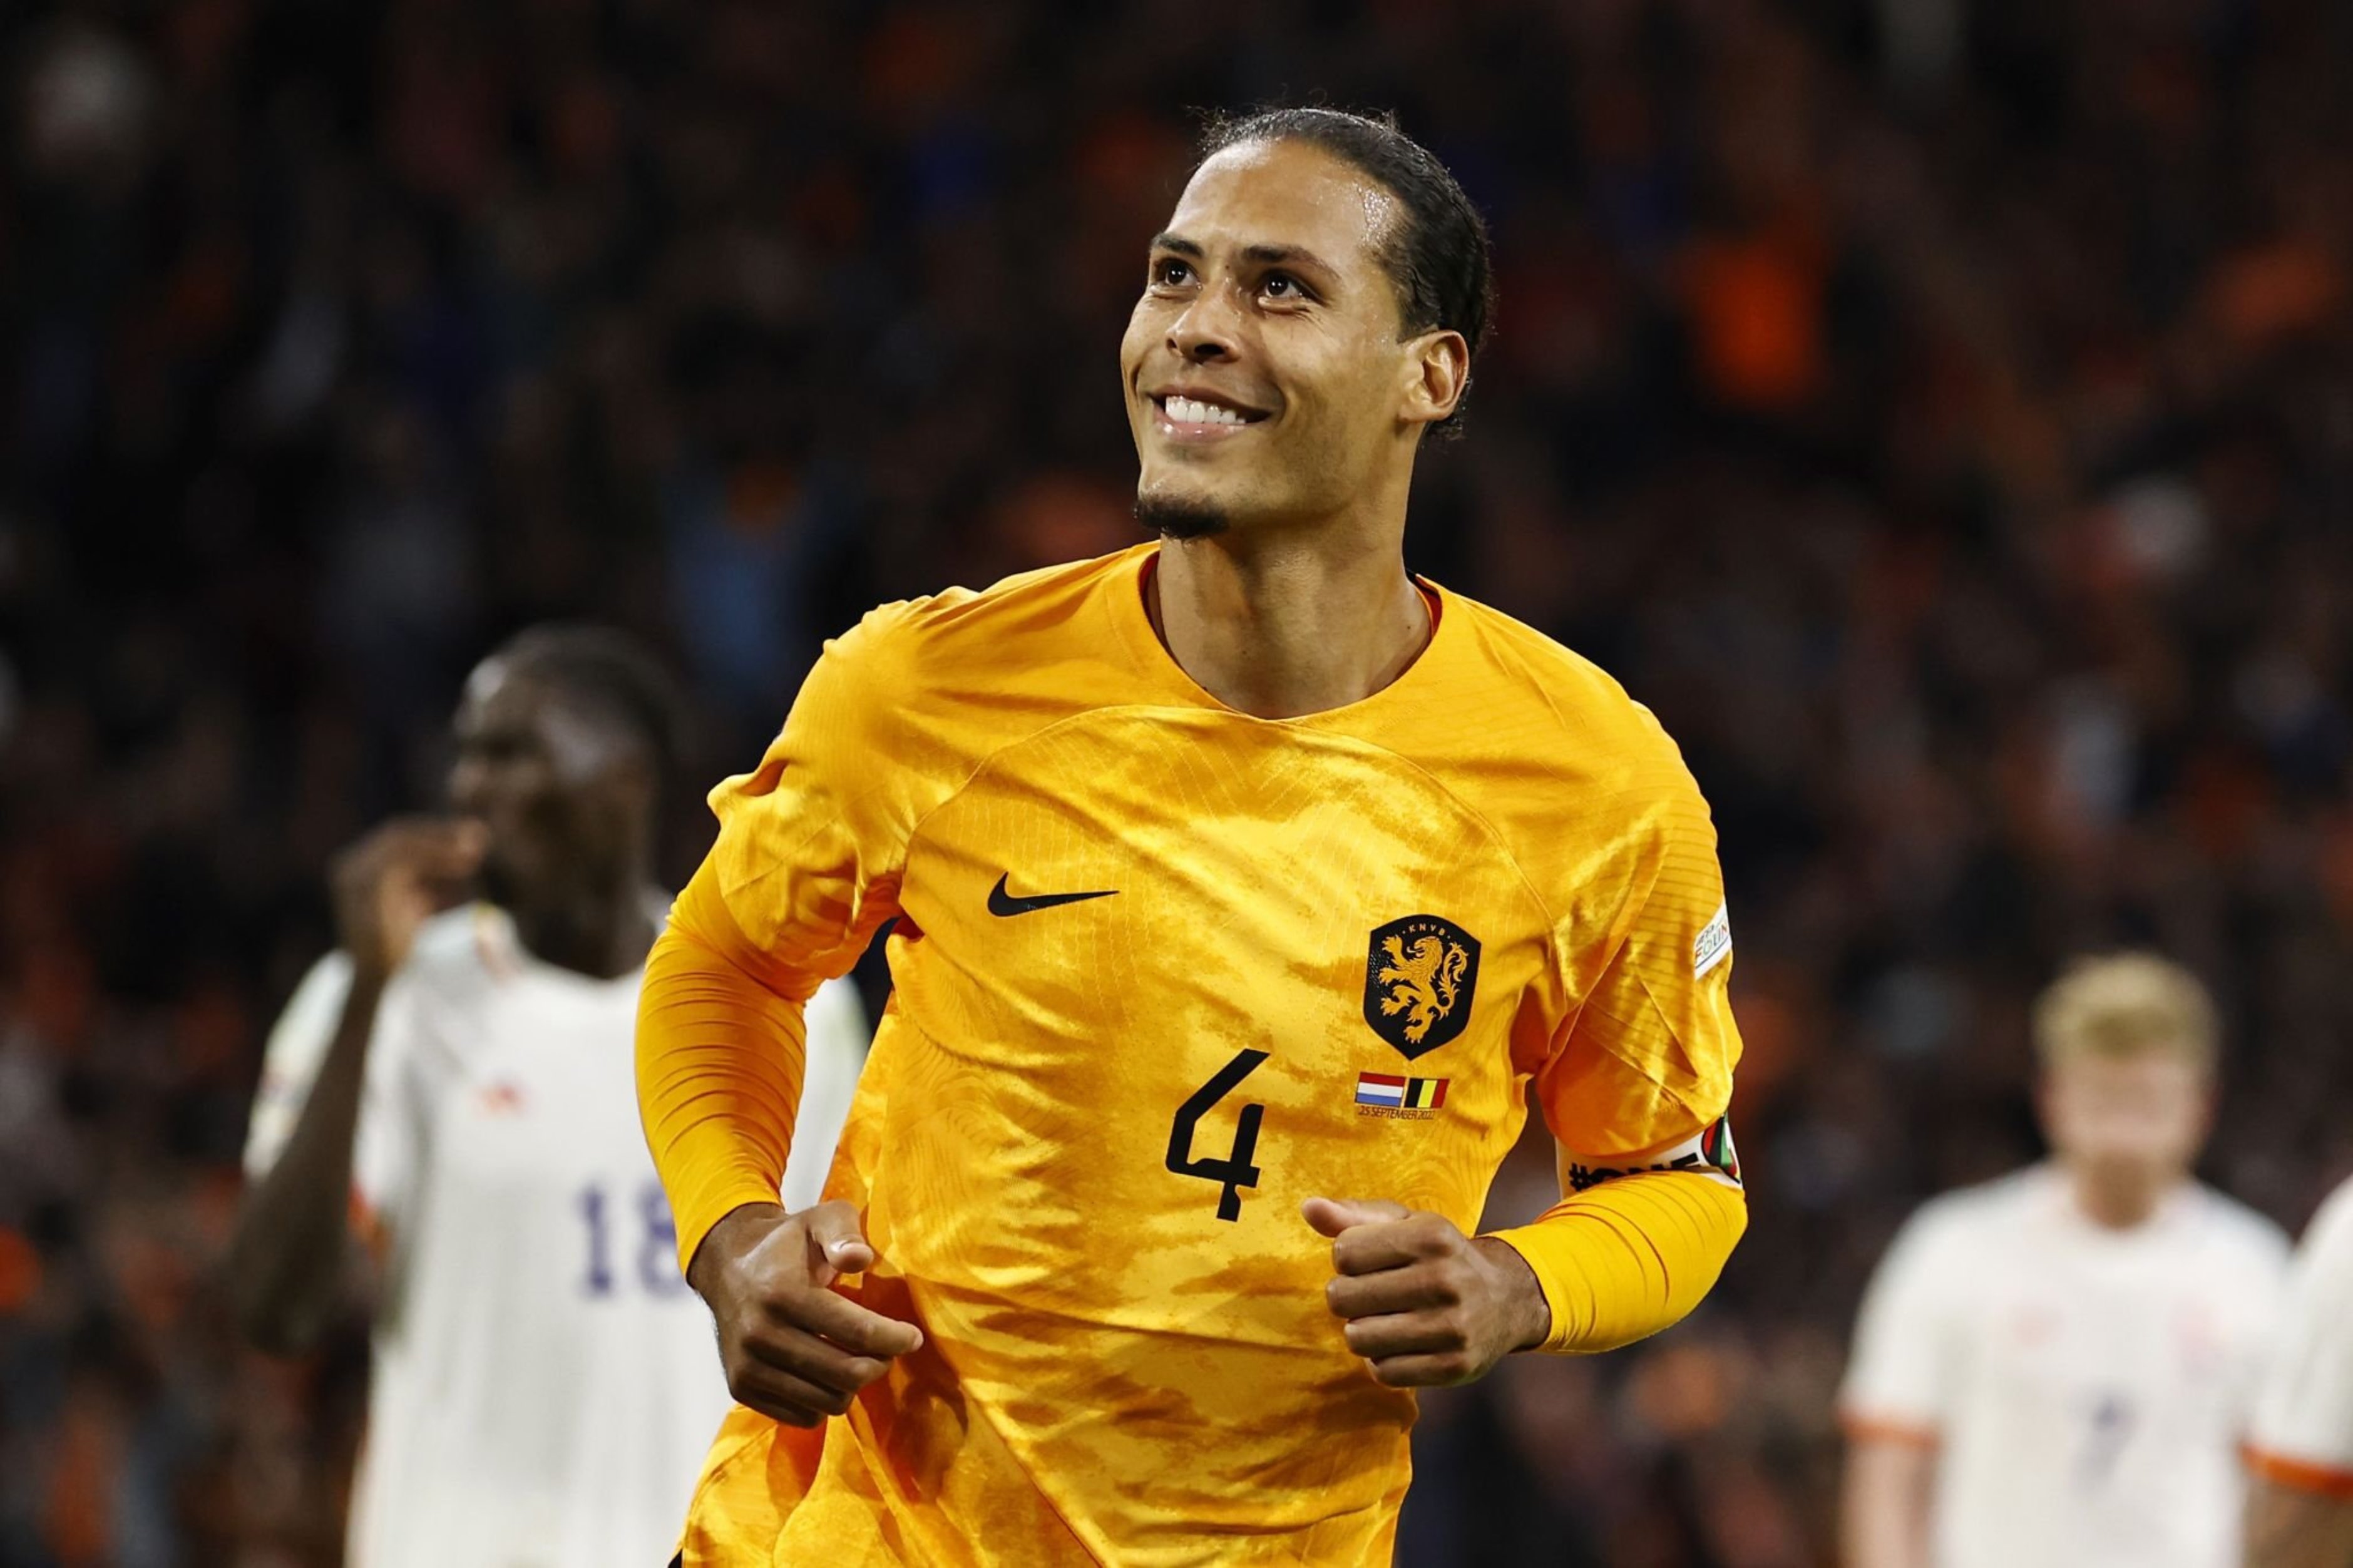 Virgil Van Dijk scored the winner as Netherlands won Belgium in the Nations League on Sunday night